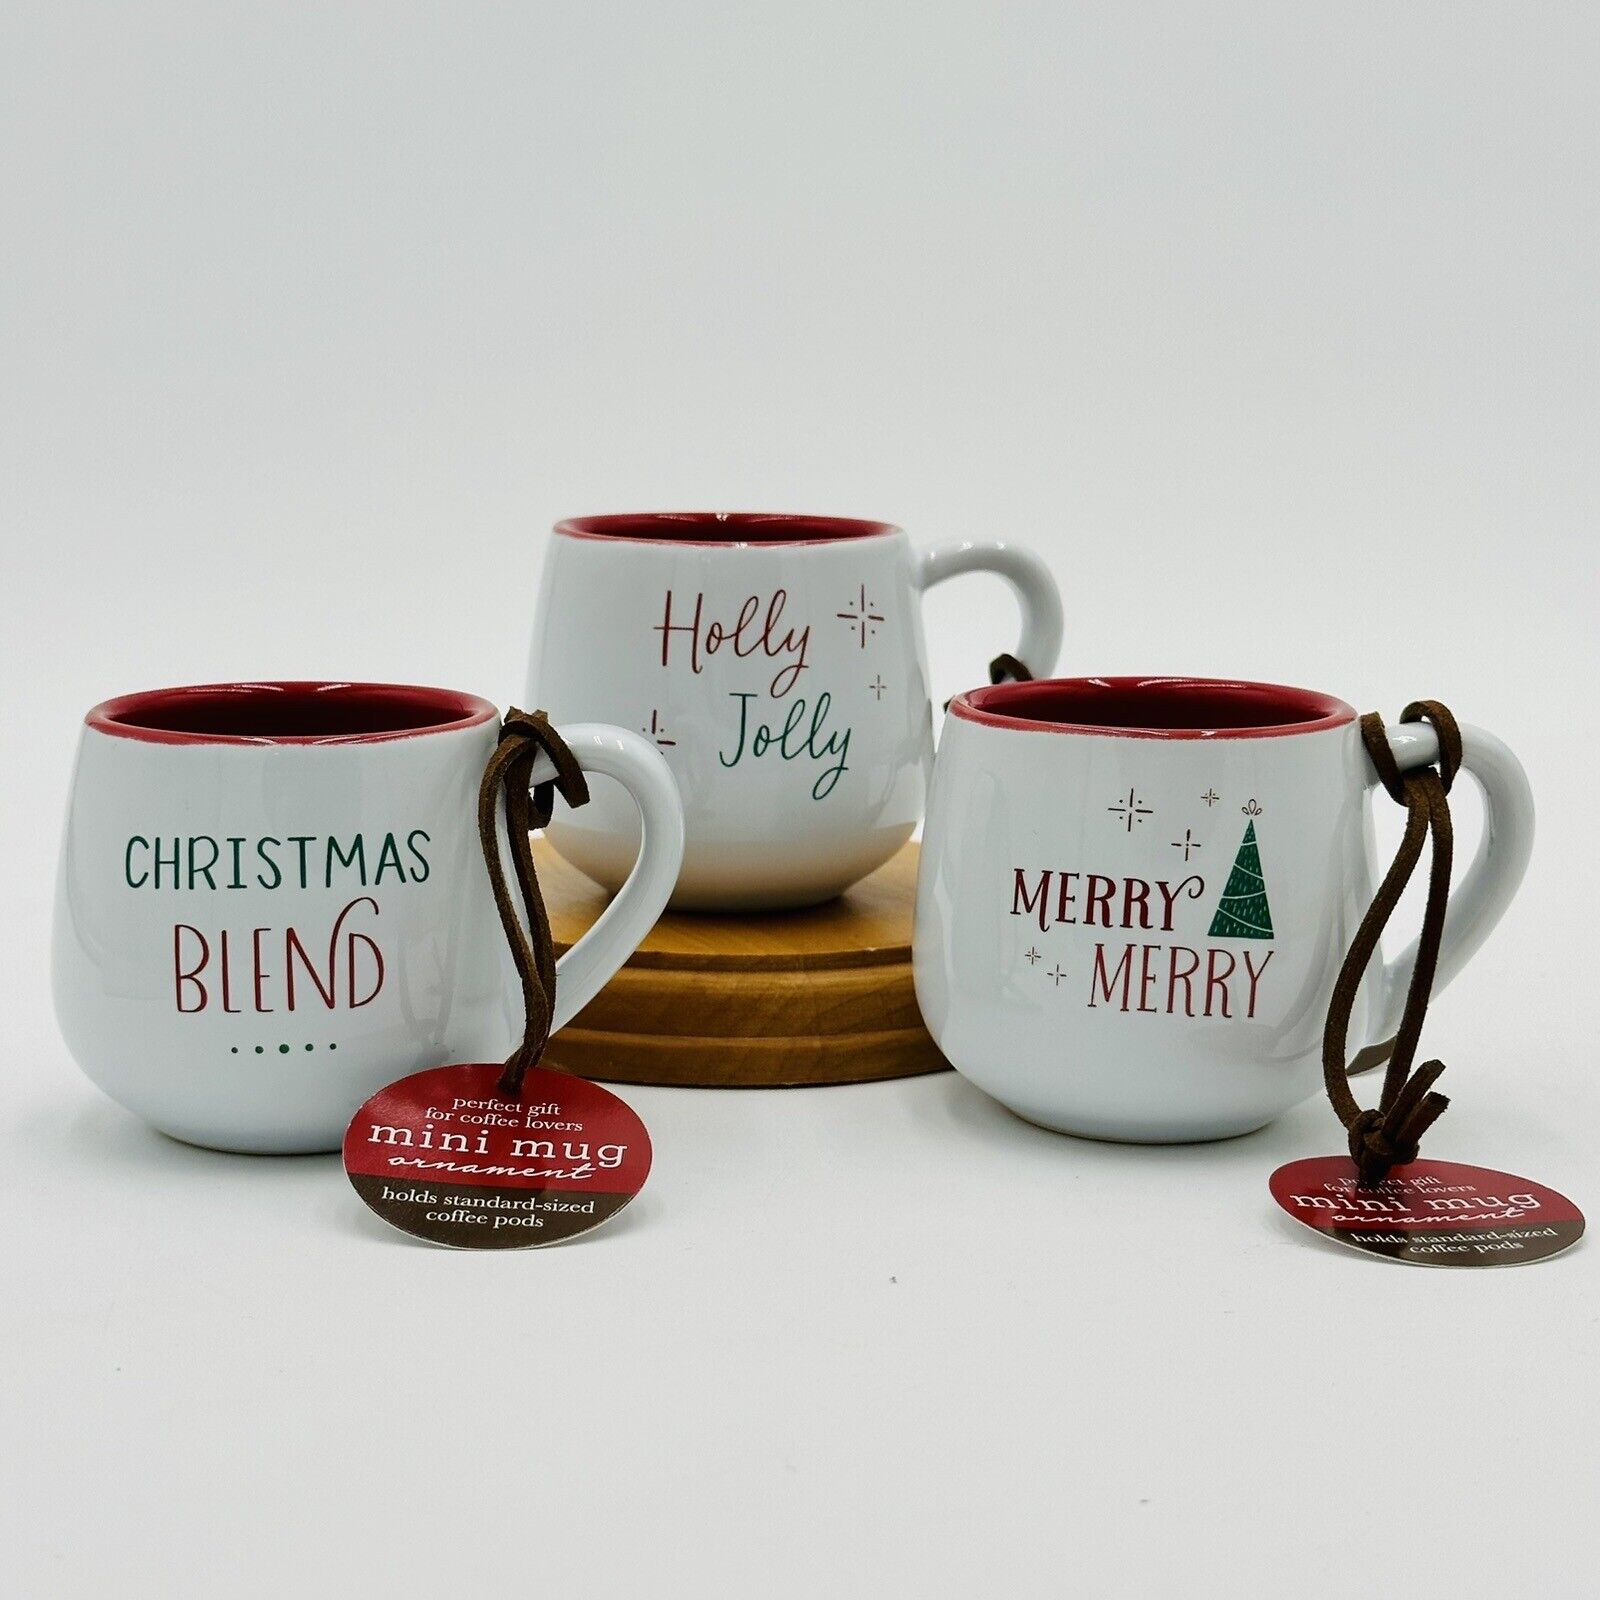 New Demdaco Mini Mug Espresso Ornament ￼Holds Standard Size Coffee Pods Set Of 3